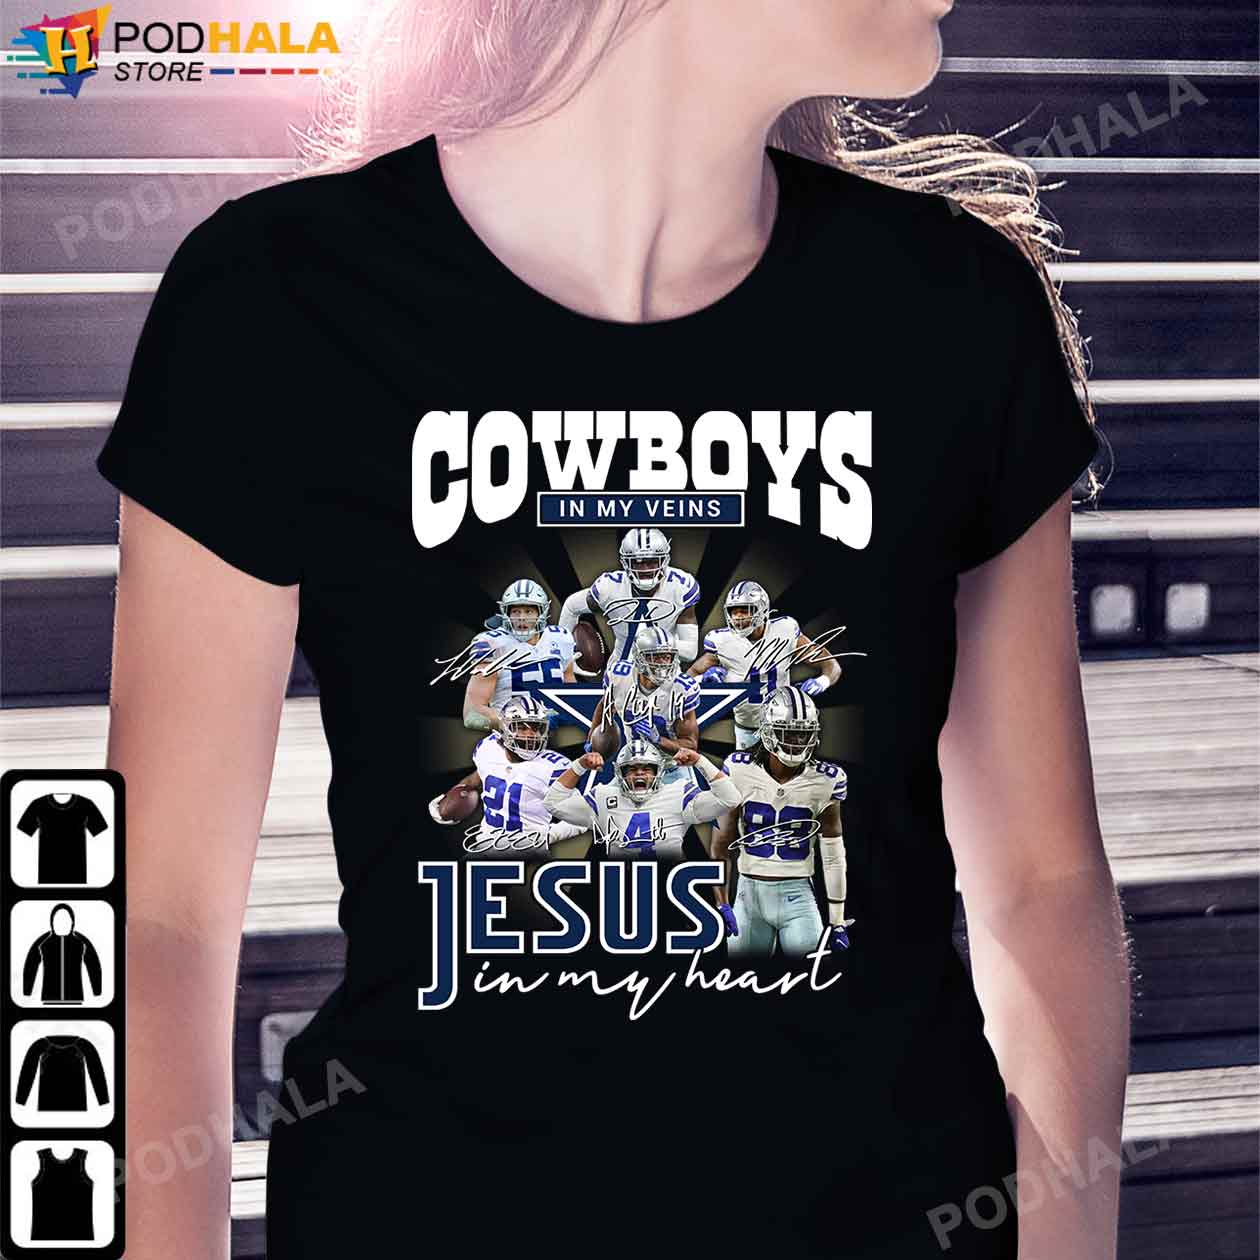 Dallas Cowboys Shirt, Cowboys In My Veins Jeus In My Heart